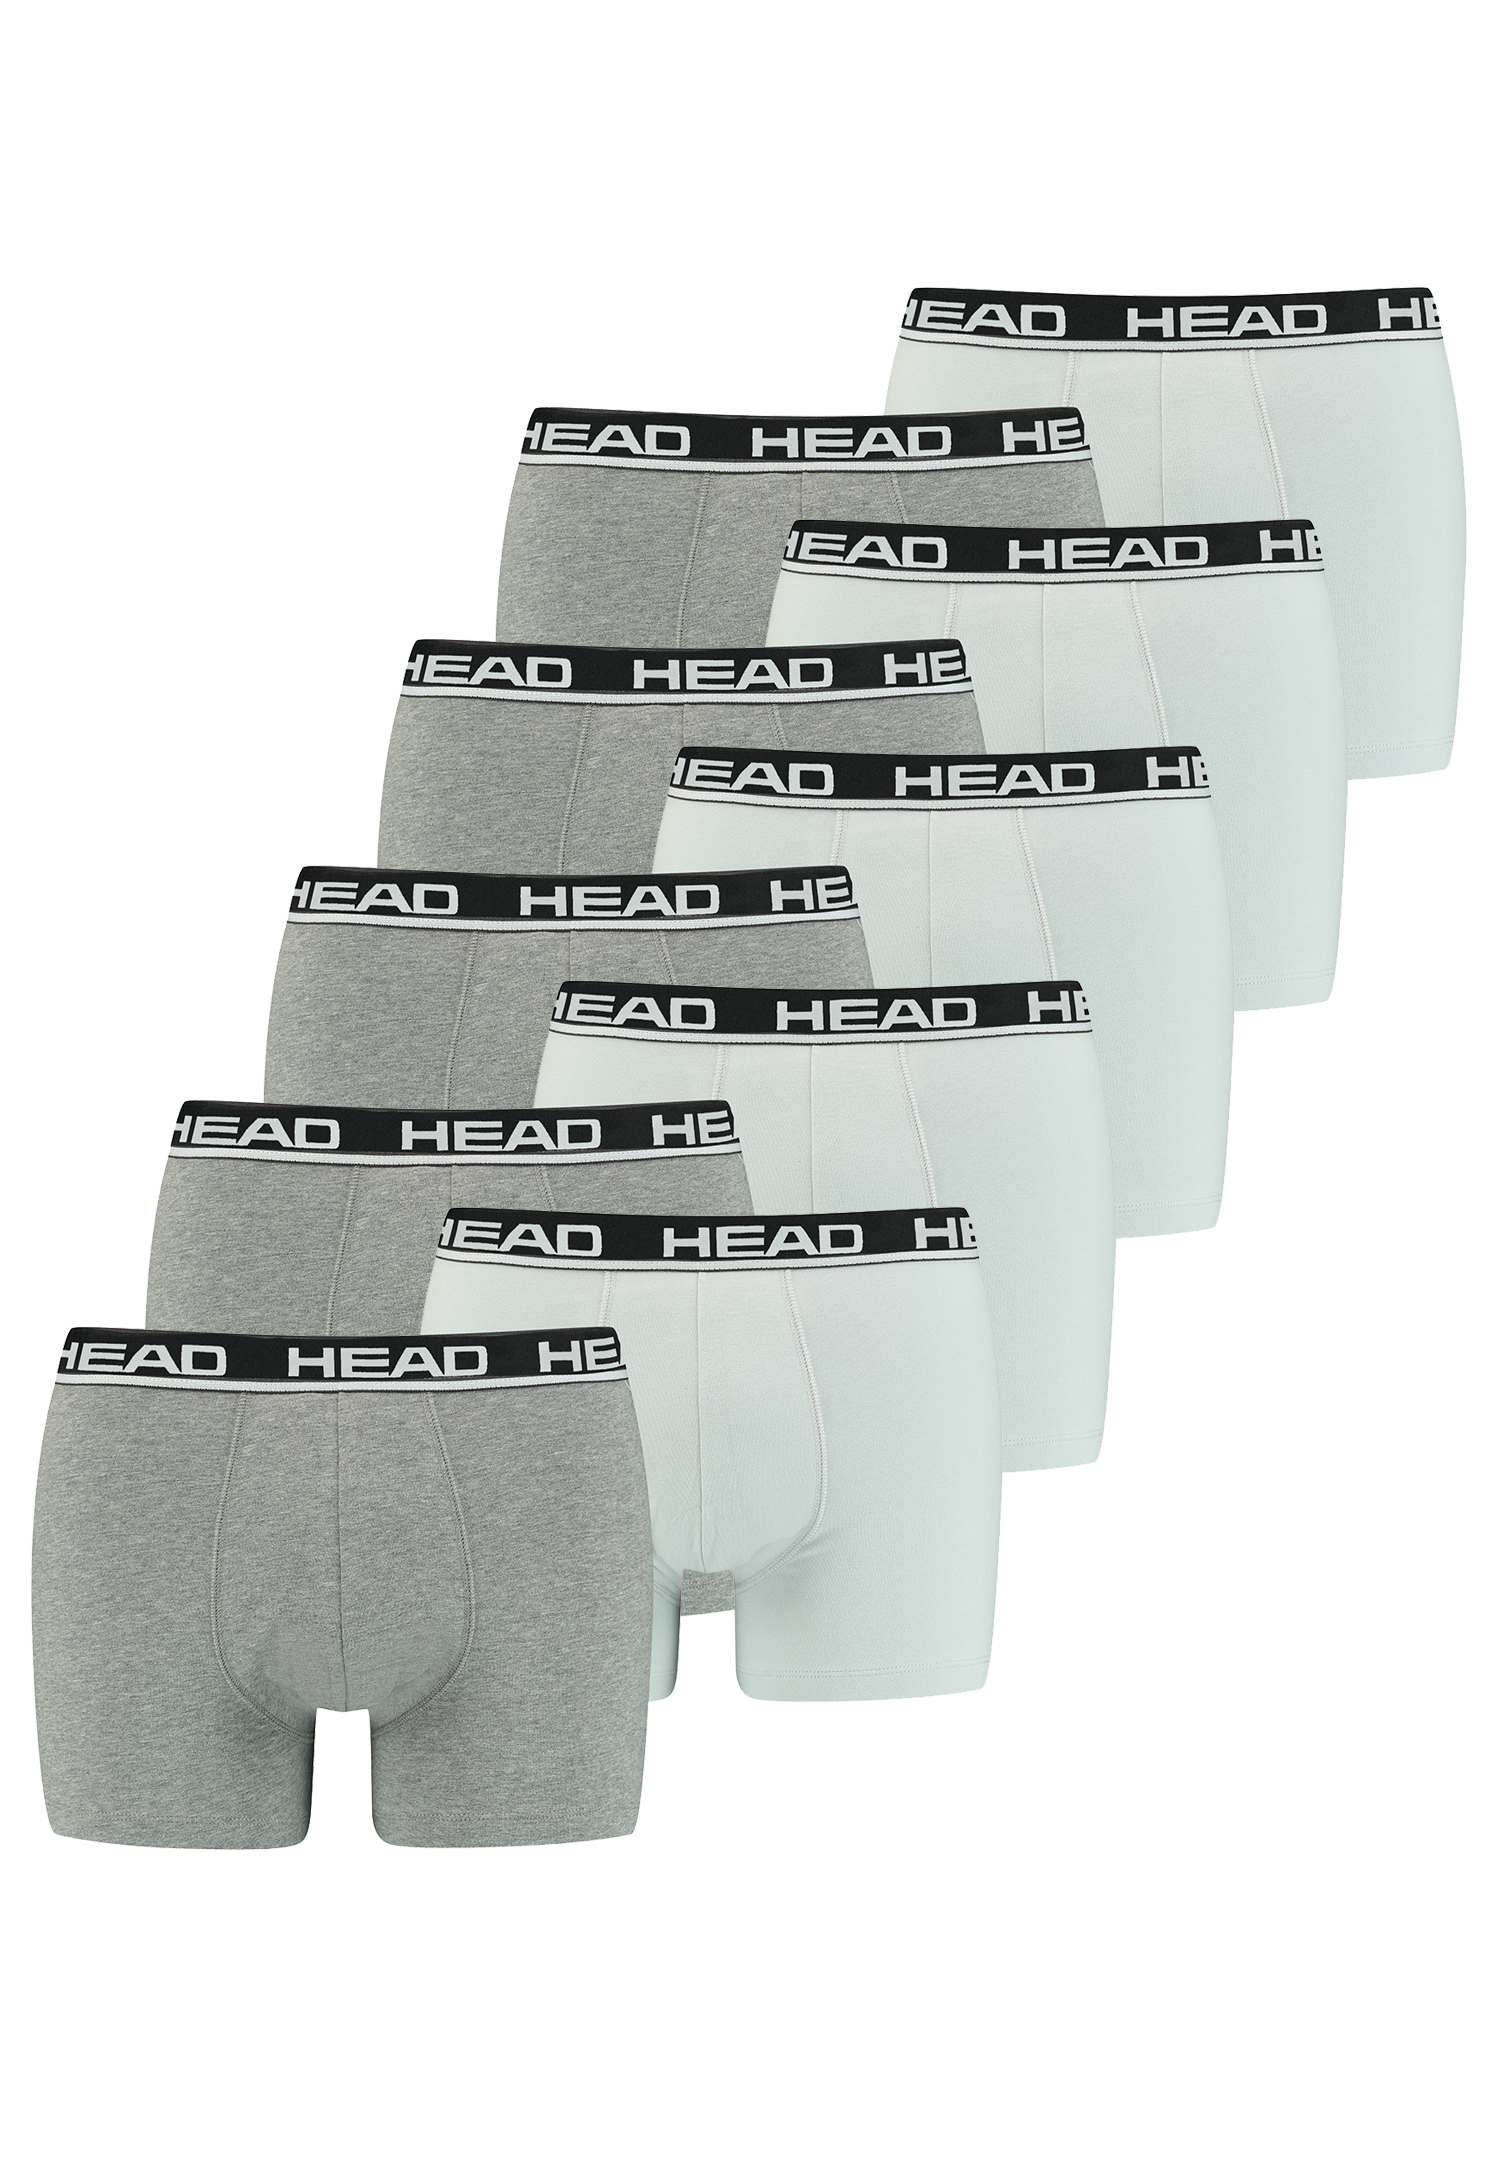 Head Herren Basic Boxer Pant Shorts Unterwäsche Unterhose 10 er Pack